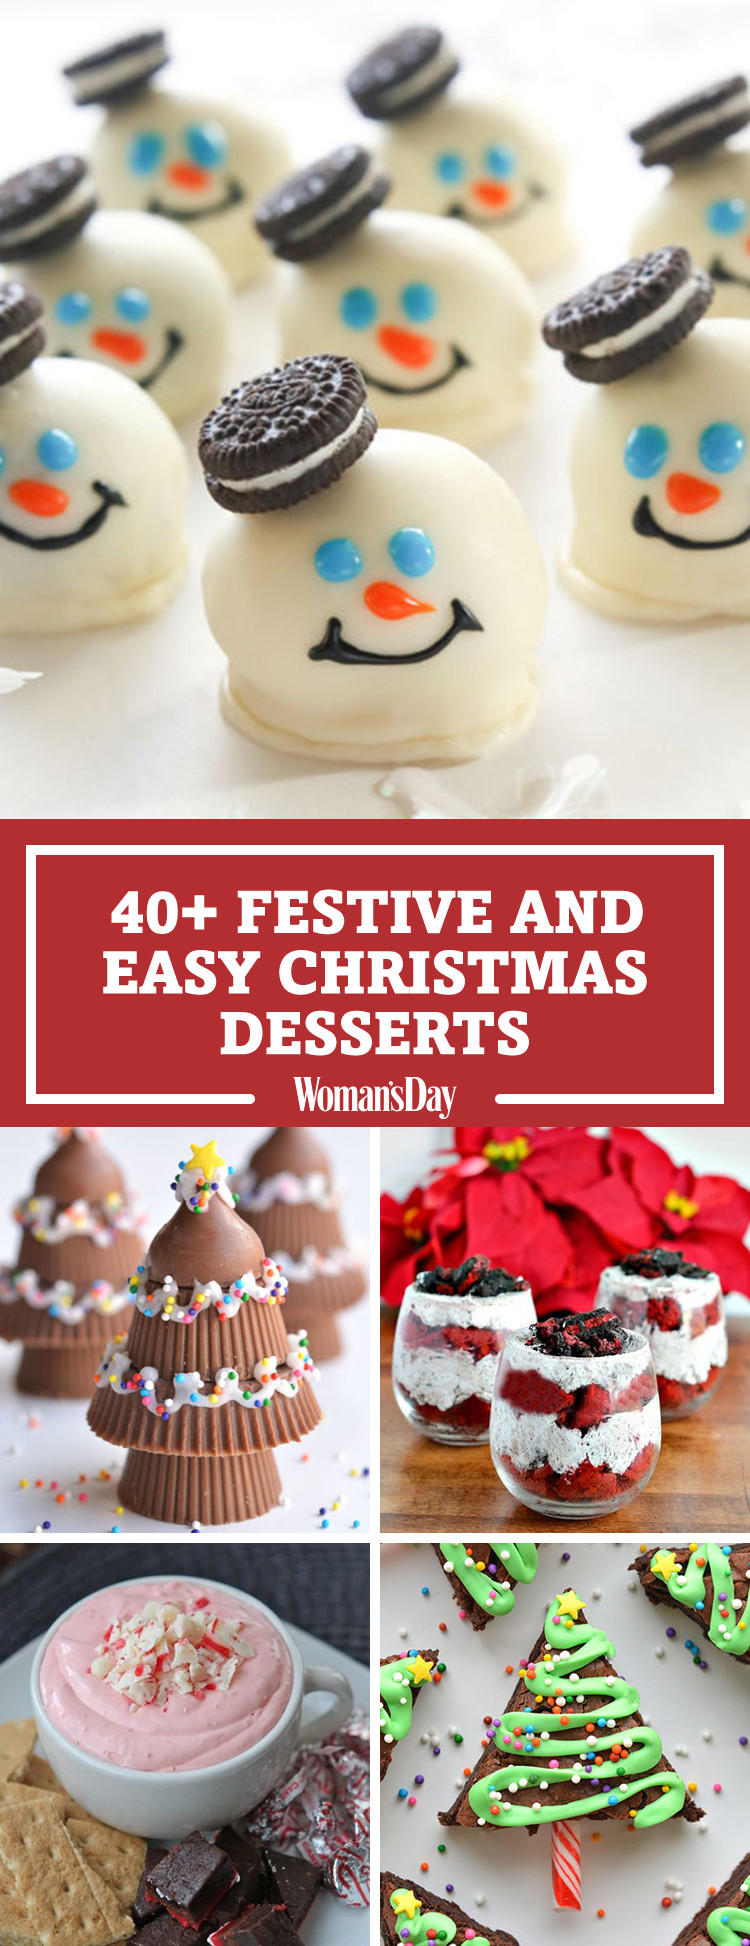 Simple Christmas Desserts Recipes
 57 Easy Christmas Dessert Recipes Best Ideas for Fun